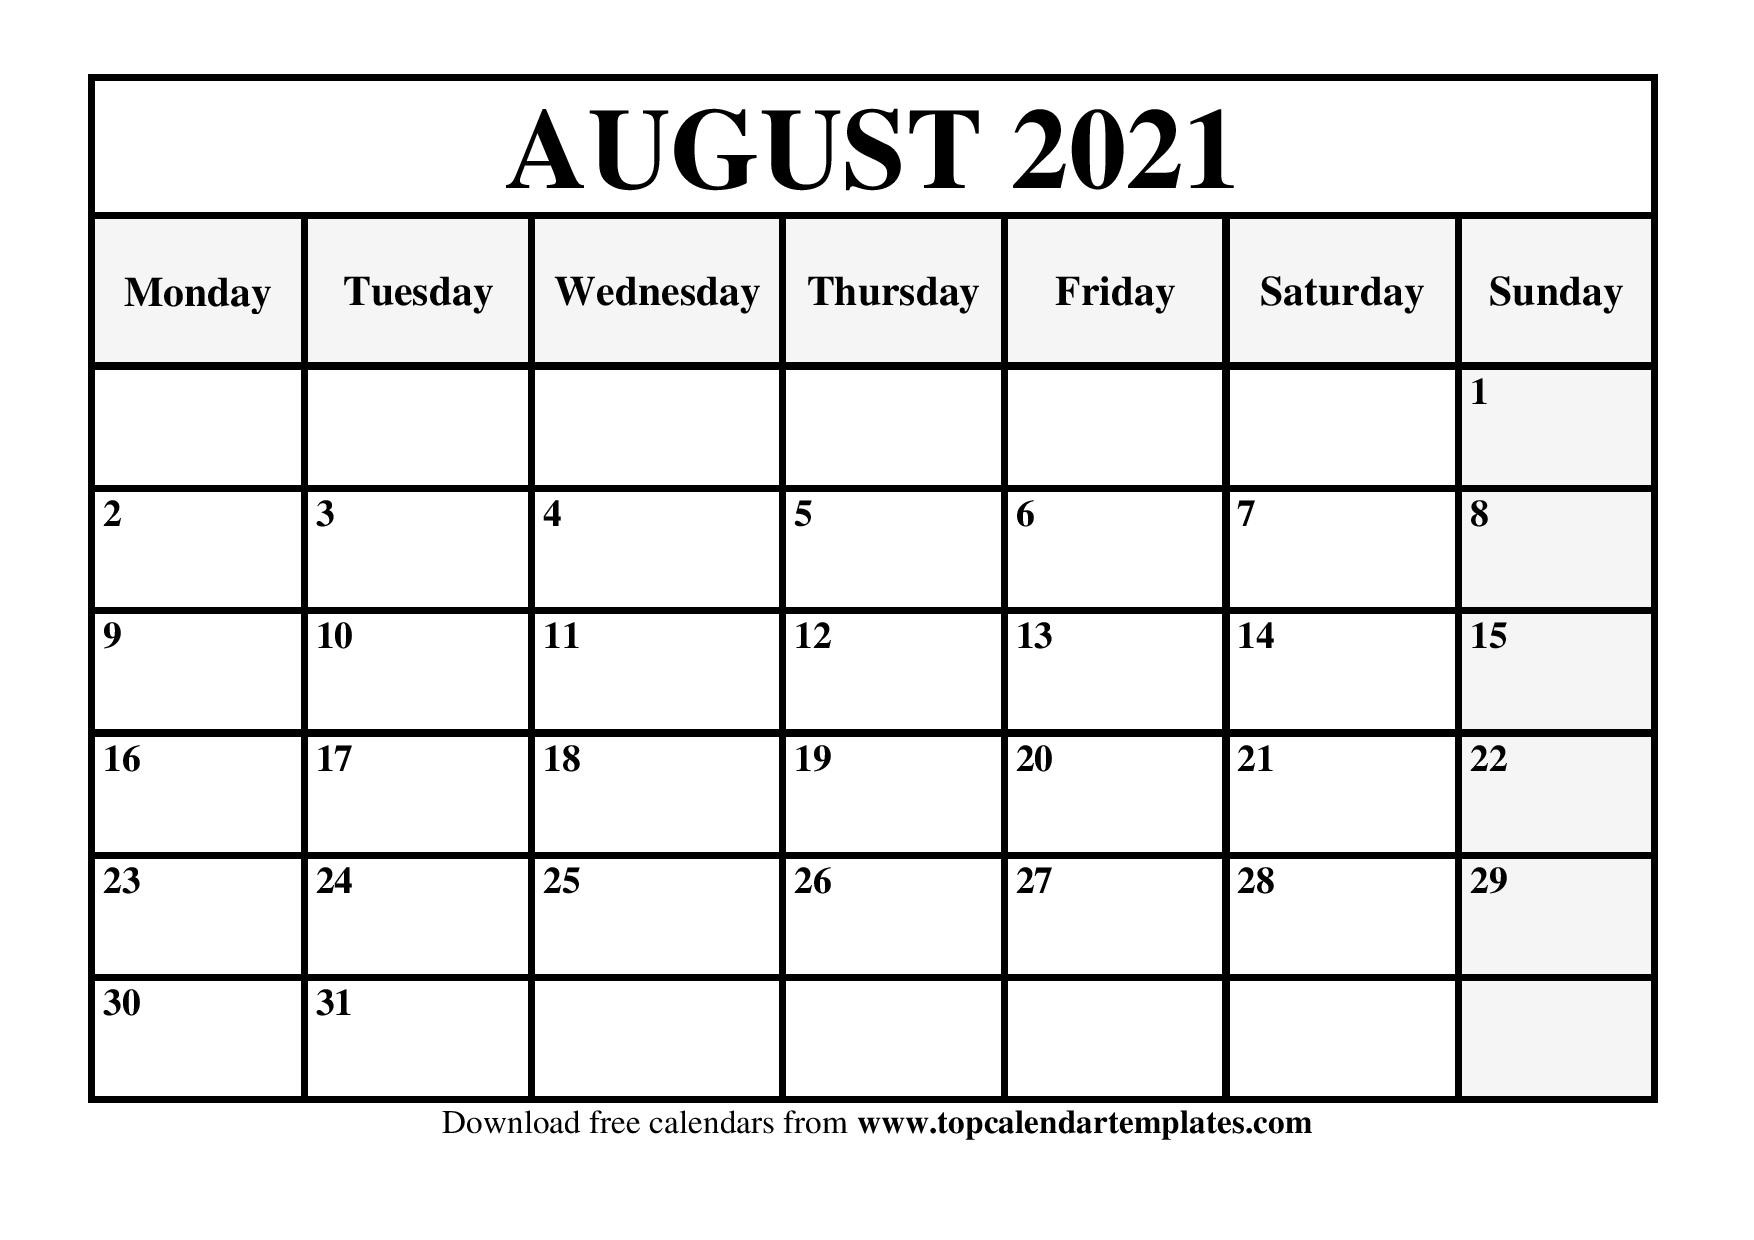 Free August 2021 Printable Calendar - Monthly Templates-August 2021 Calendar Print